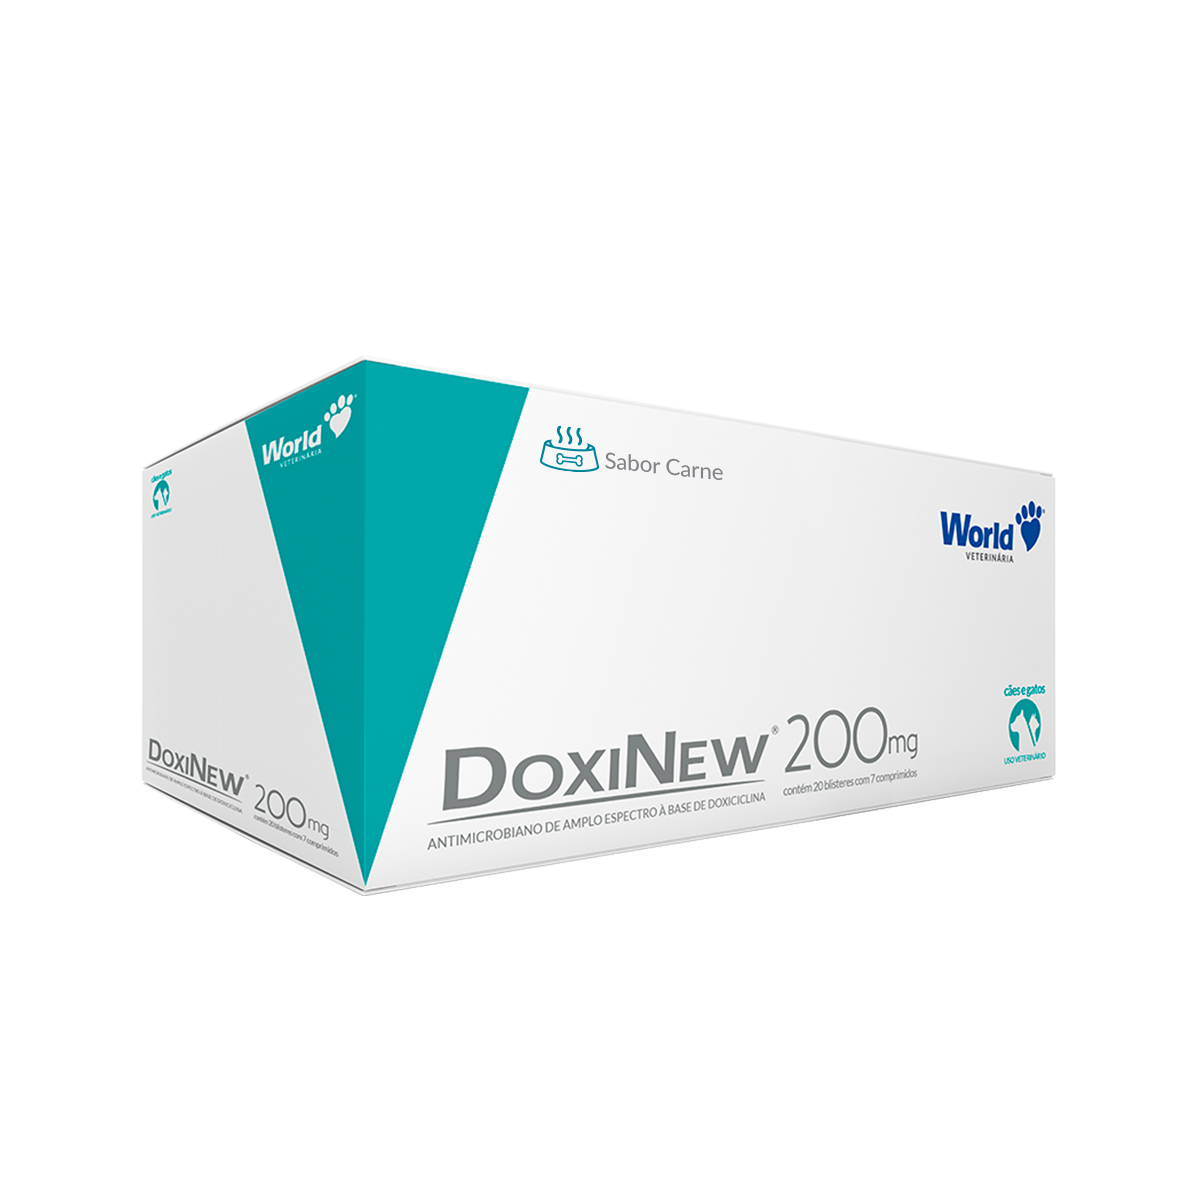 DoxiNew 200mg - display JPG